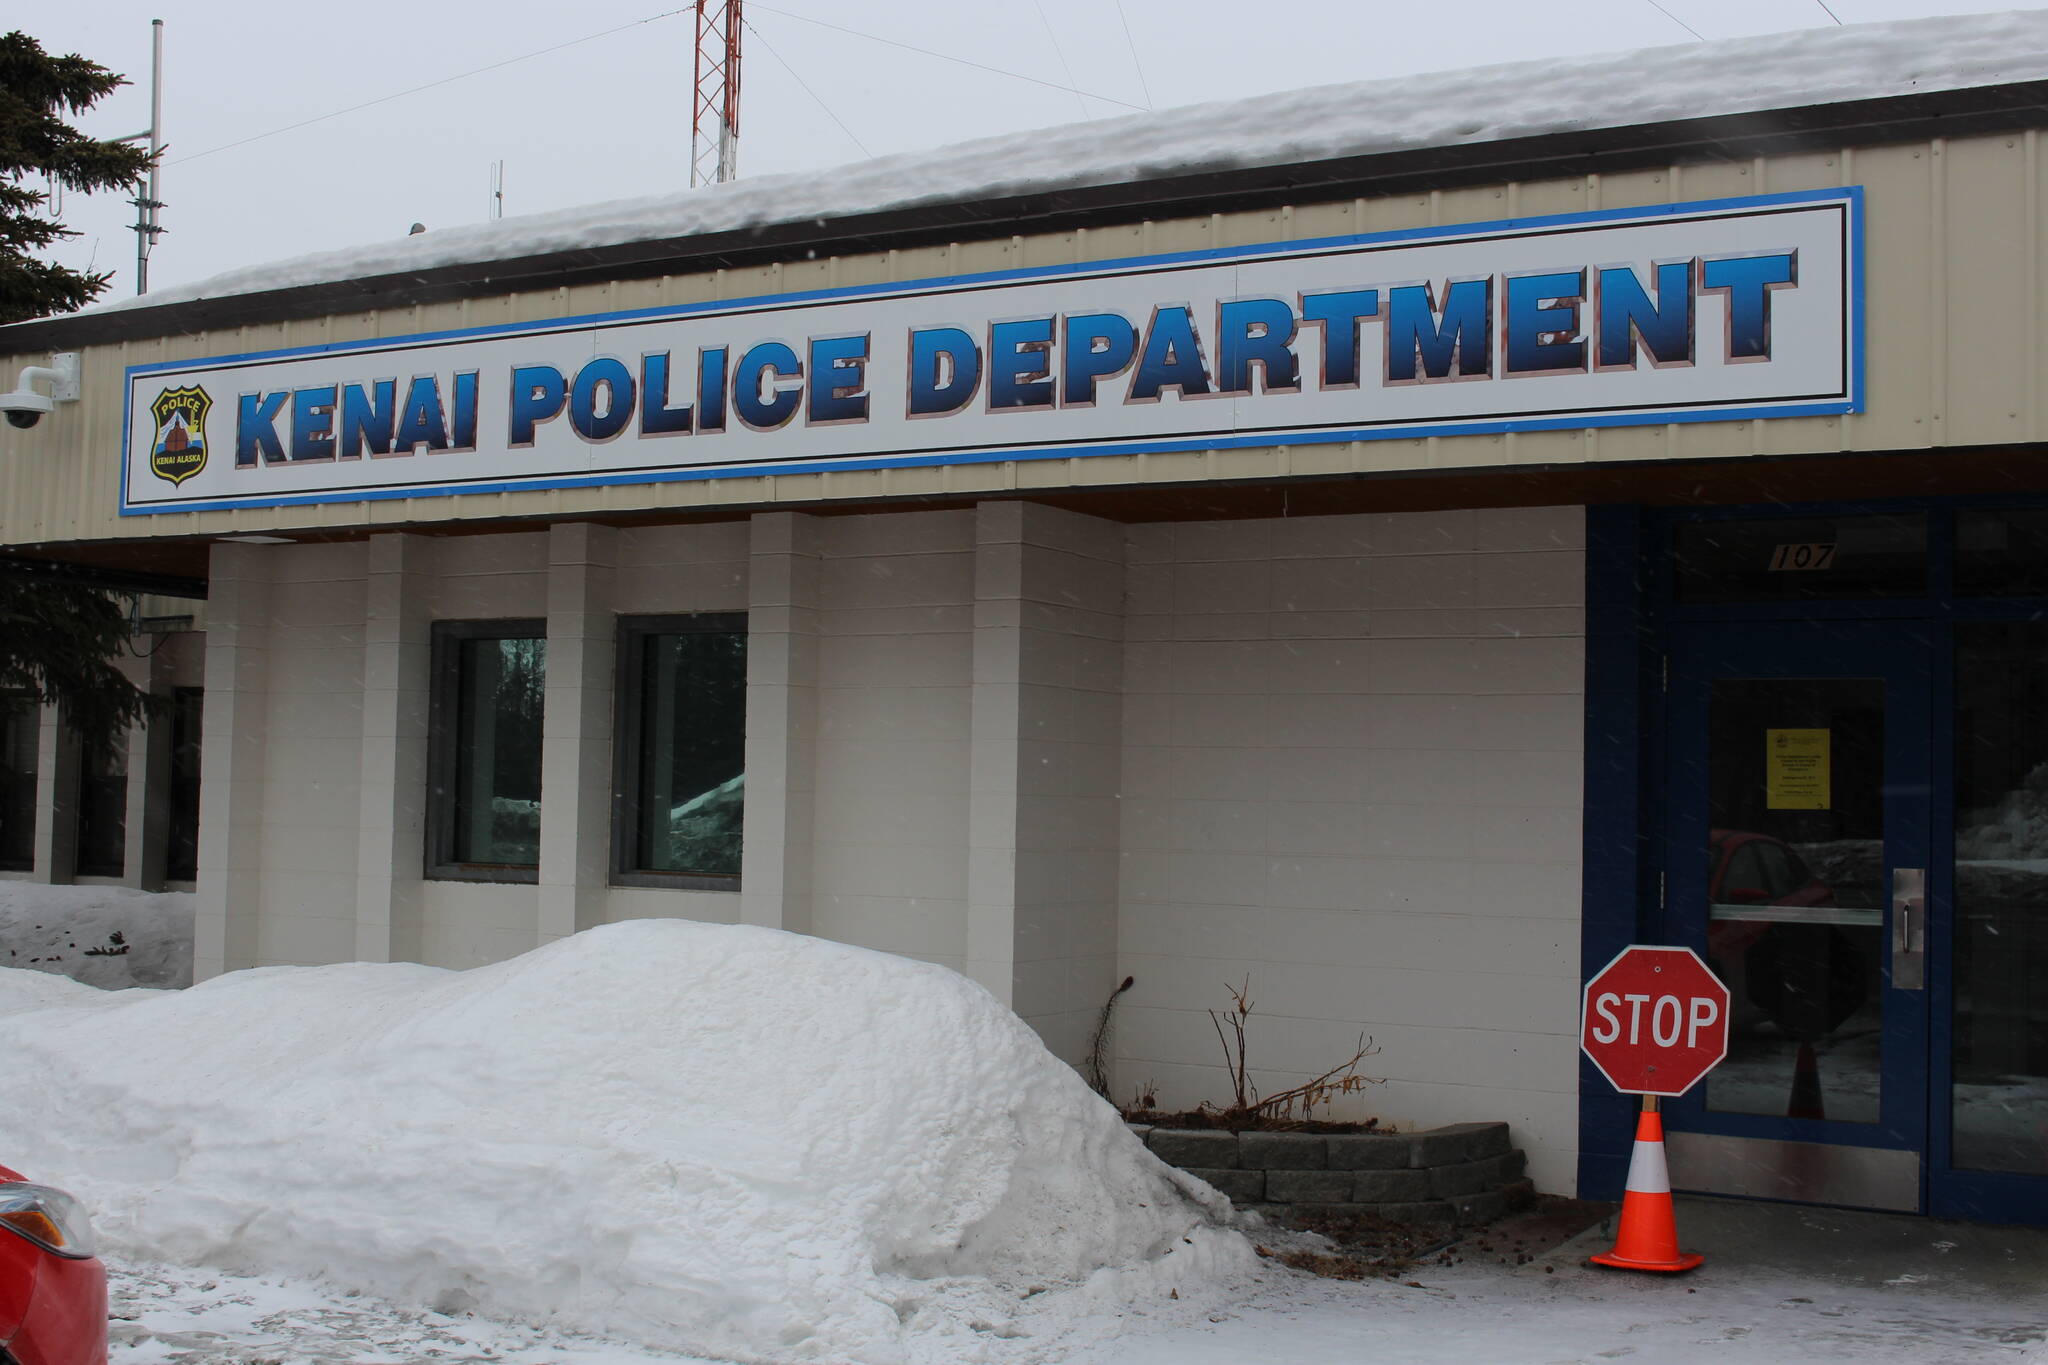 The entrance to the Kenai Police Department, as seen in Kenai, Alaska, on April 1, 2020. (Peninsula Clarion file)